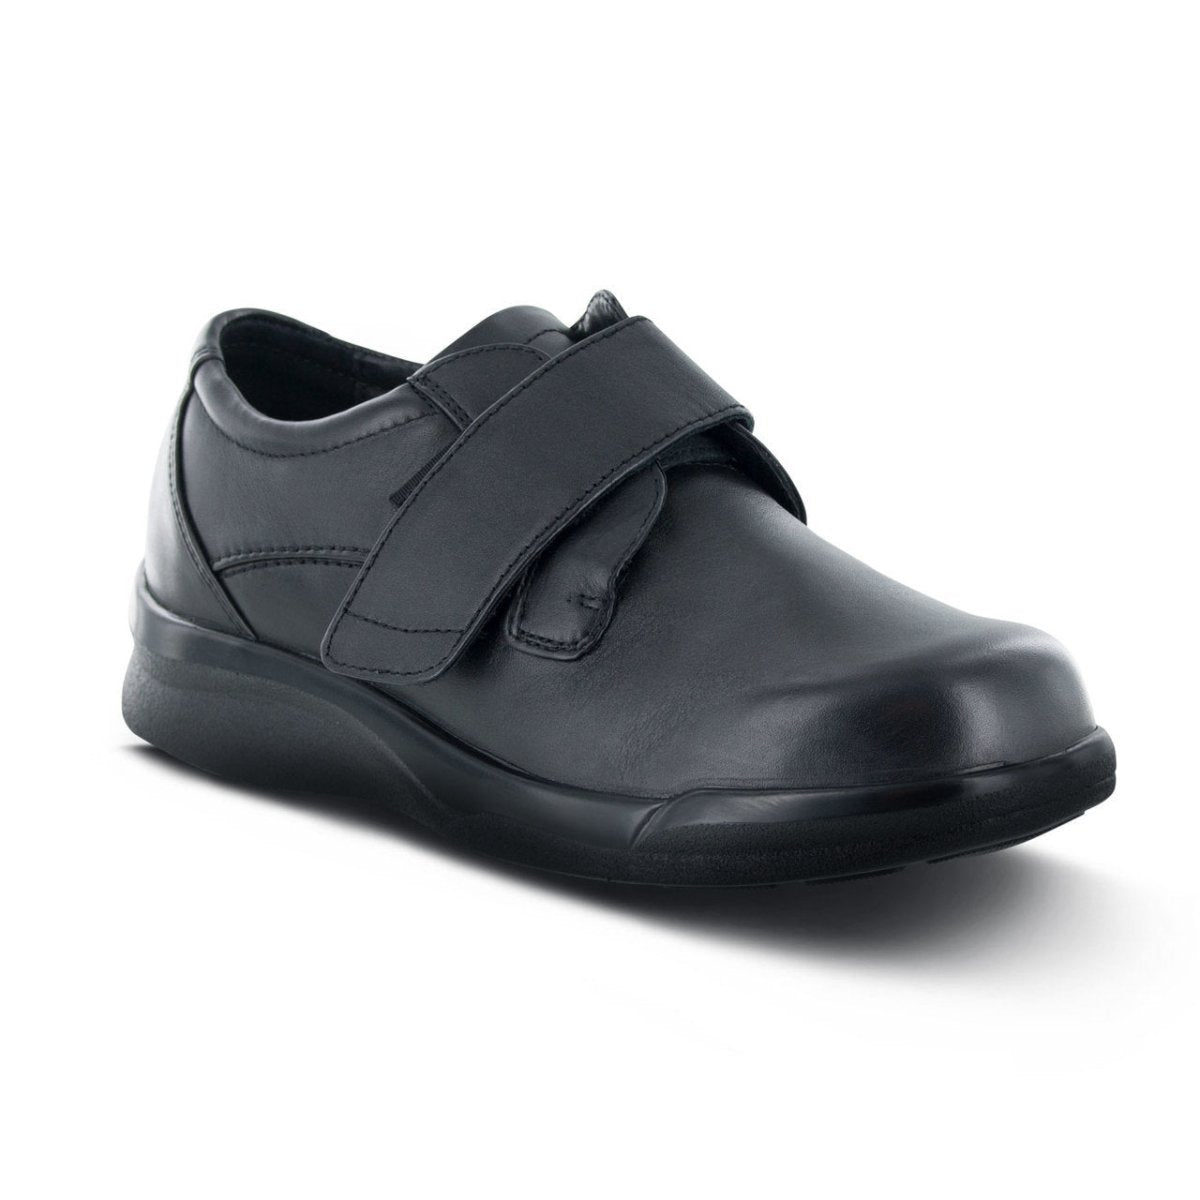 APEX B3000M AMBULATOR BIOMECHANICAL MEN'S SINGLE STRAP CASUAL SHOE IN BLACK VELCRO - TLW Shoes